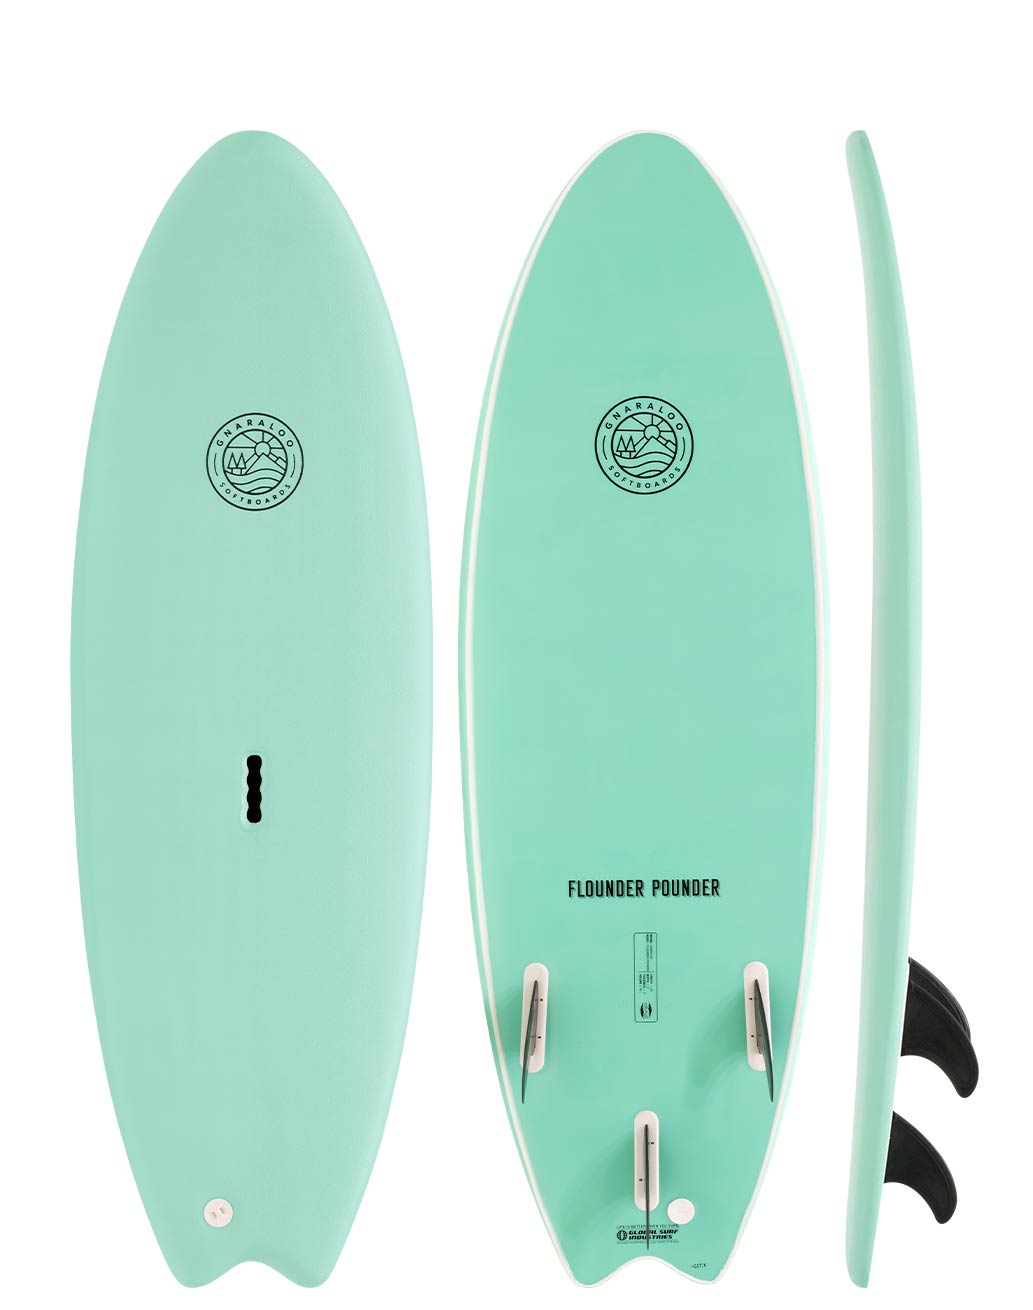 Gnaraloo soft surfboards - Flounder Pounder green surfboard